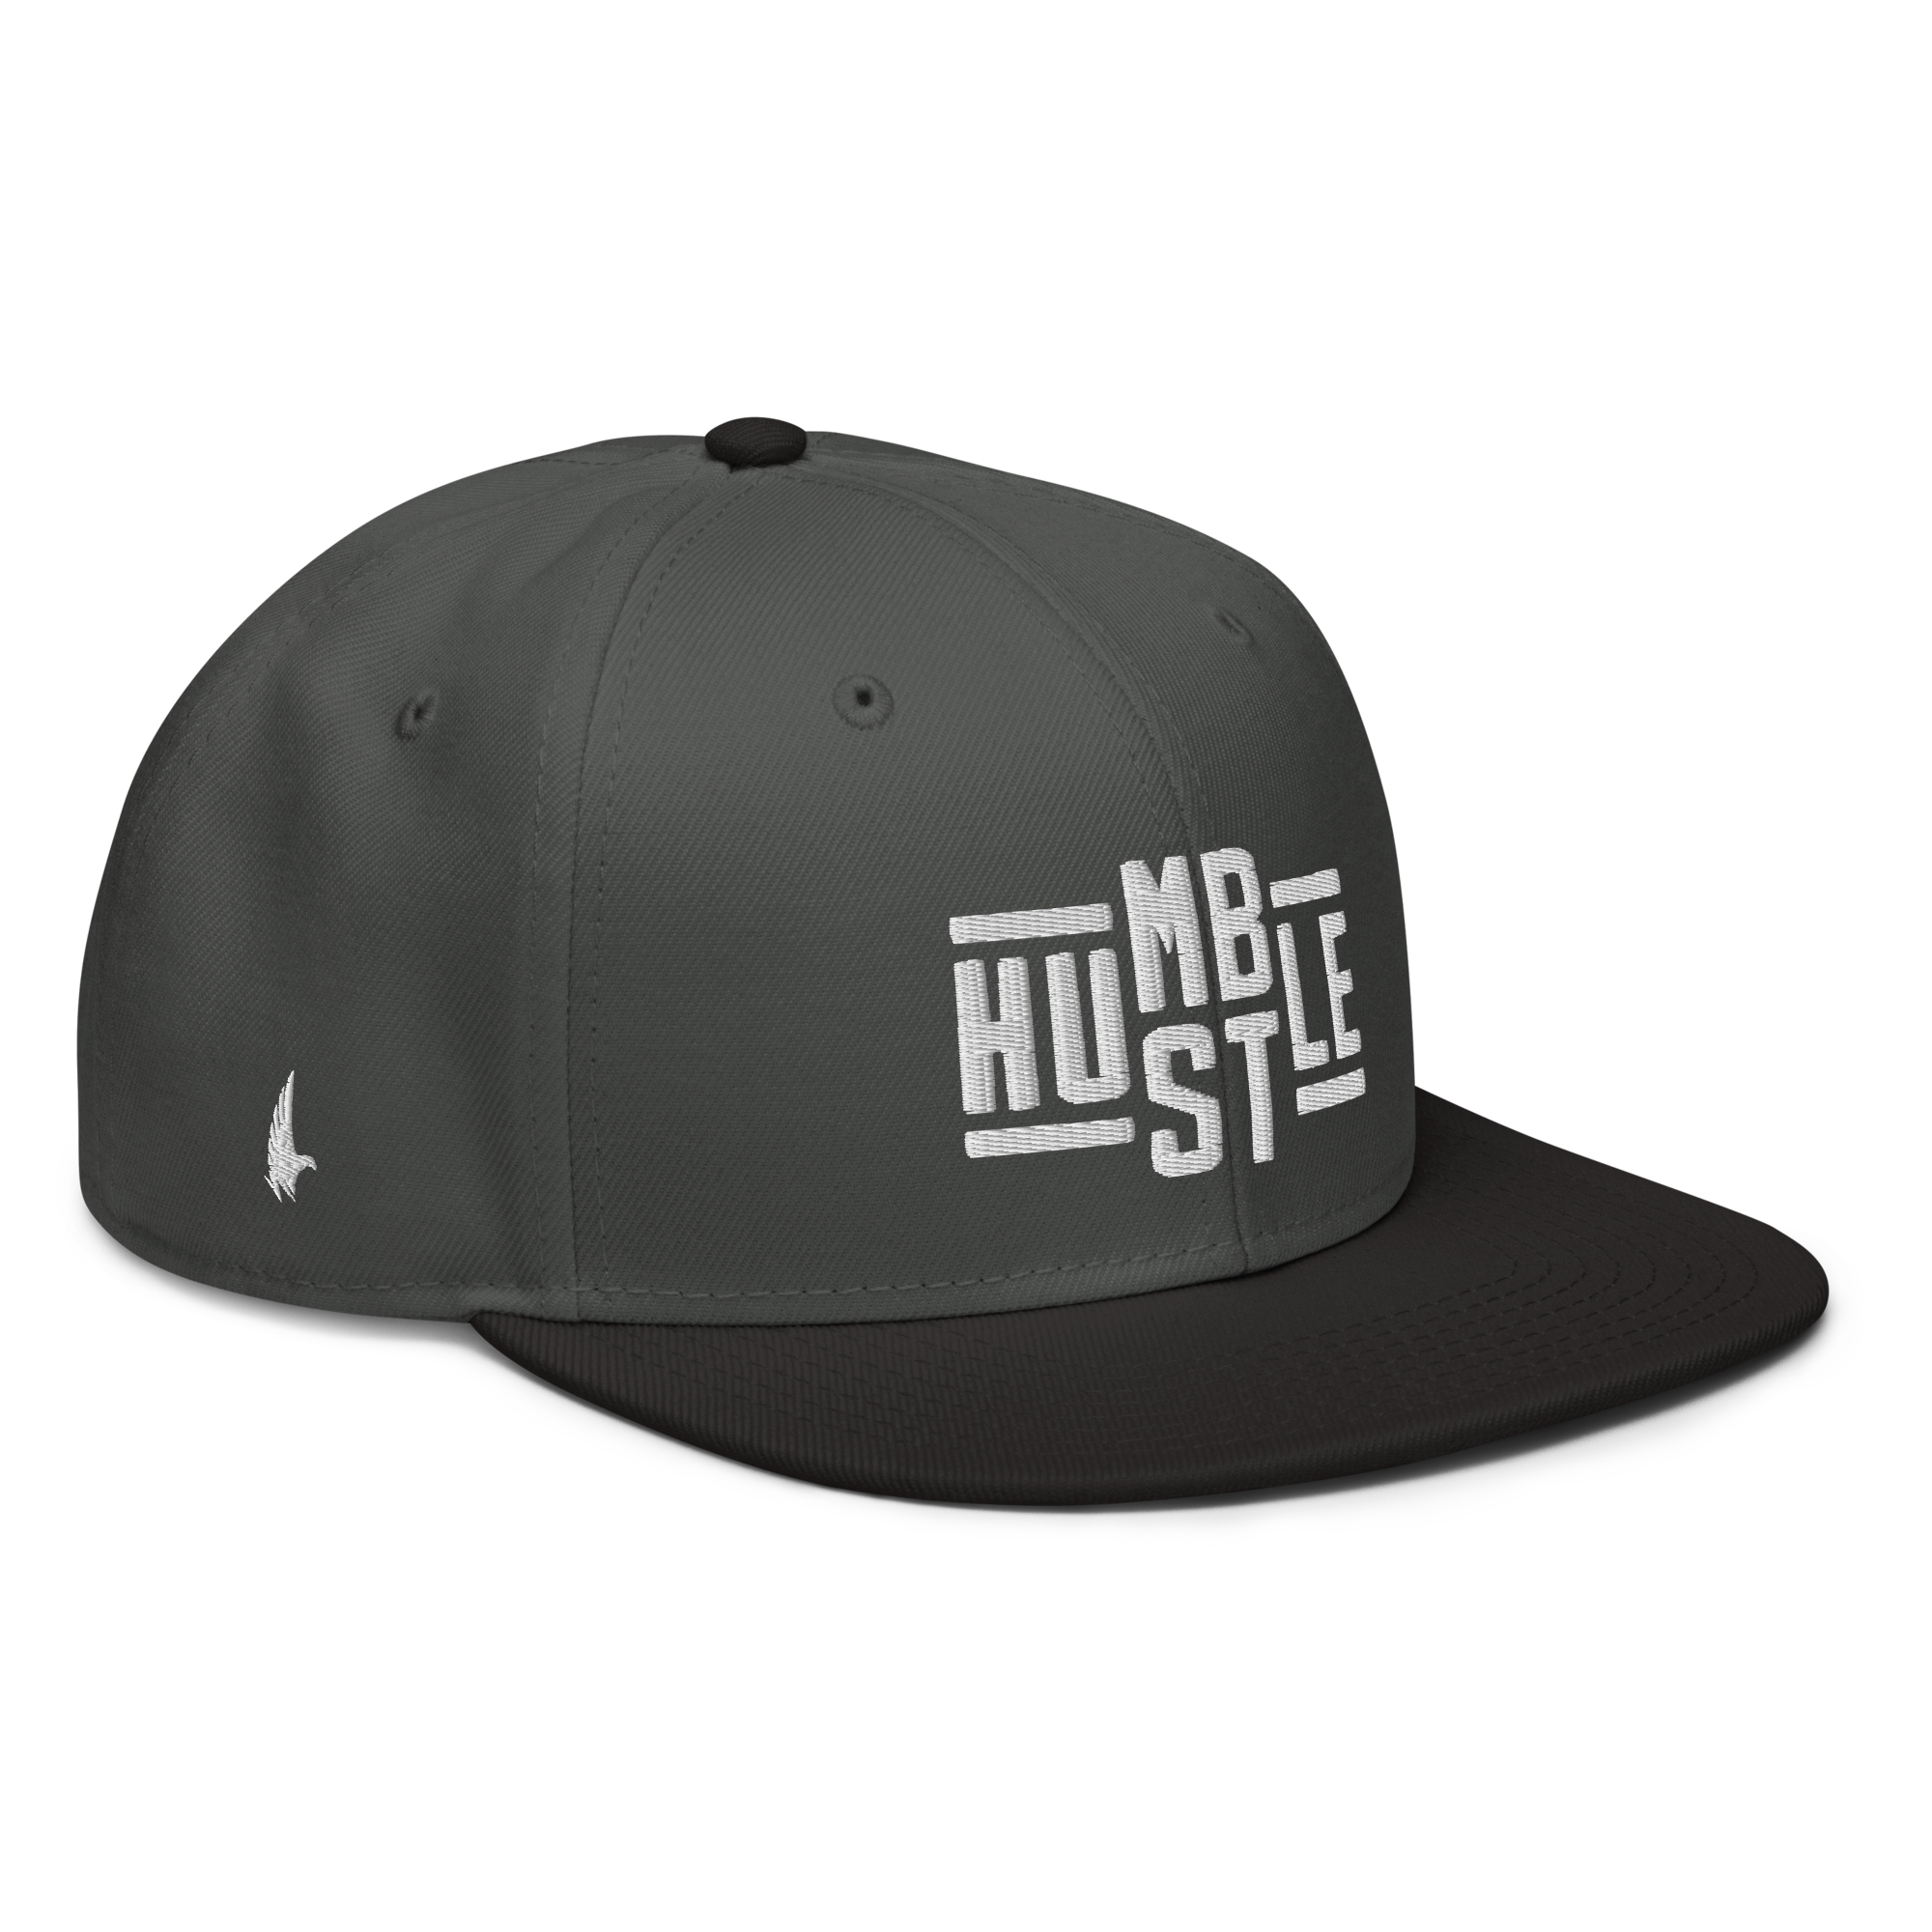 Hustle Snapback Hat - Charcoal Gray/White/Black OS - Loyalty Vibes